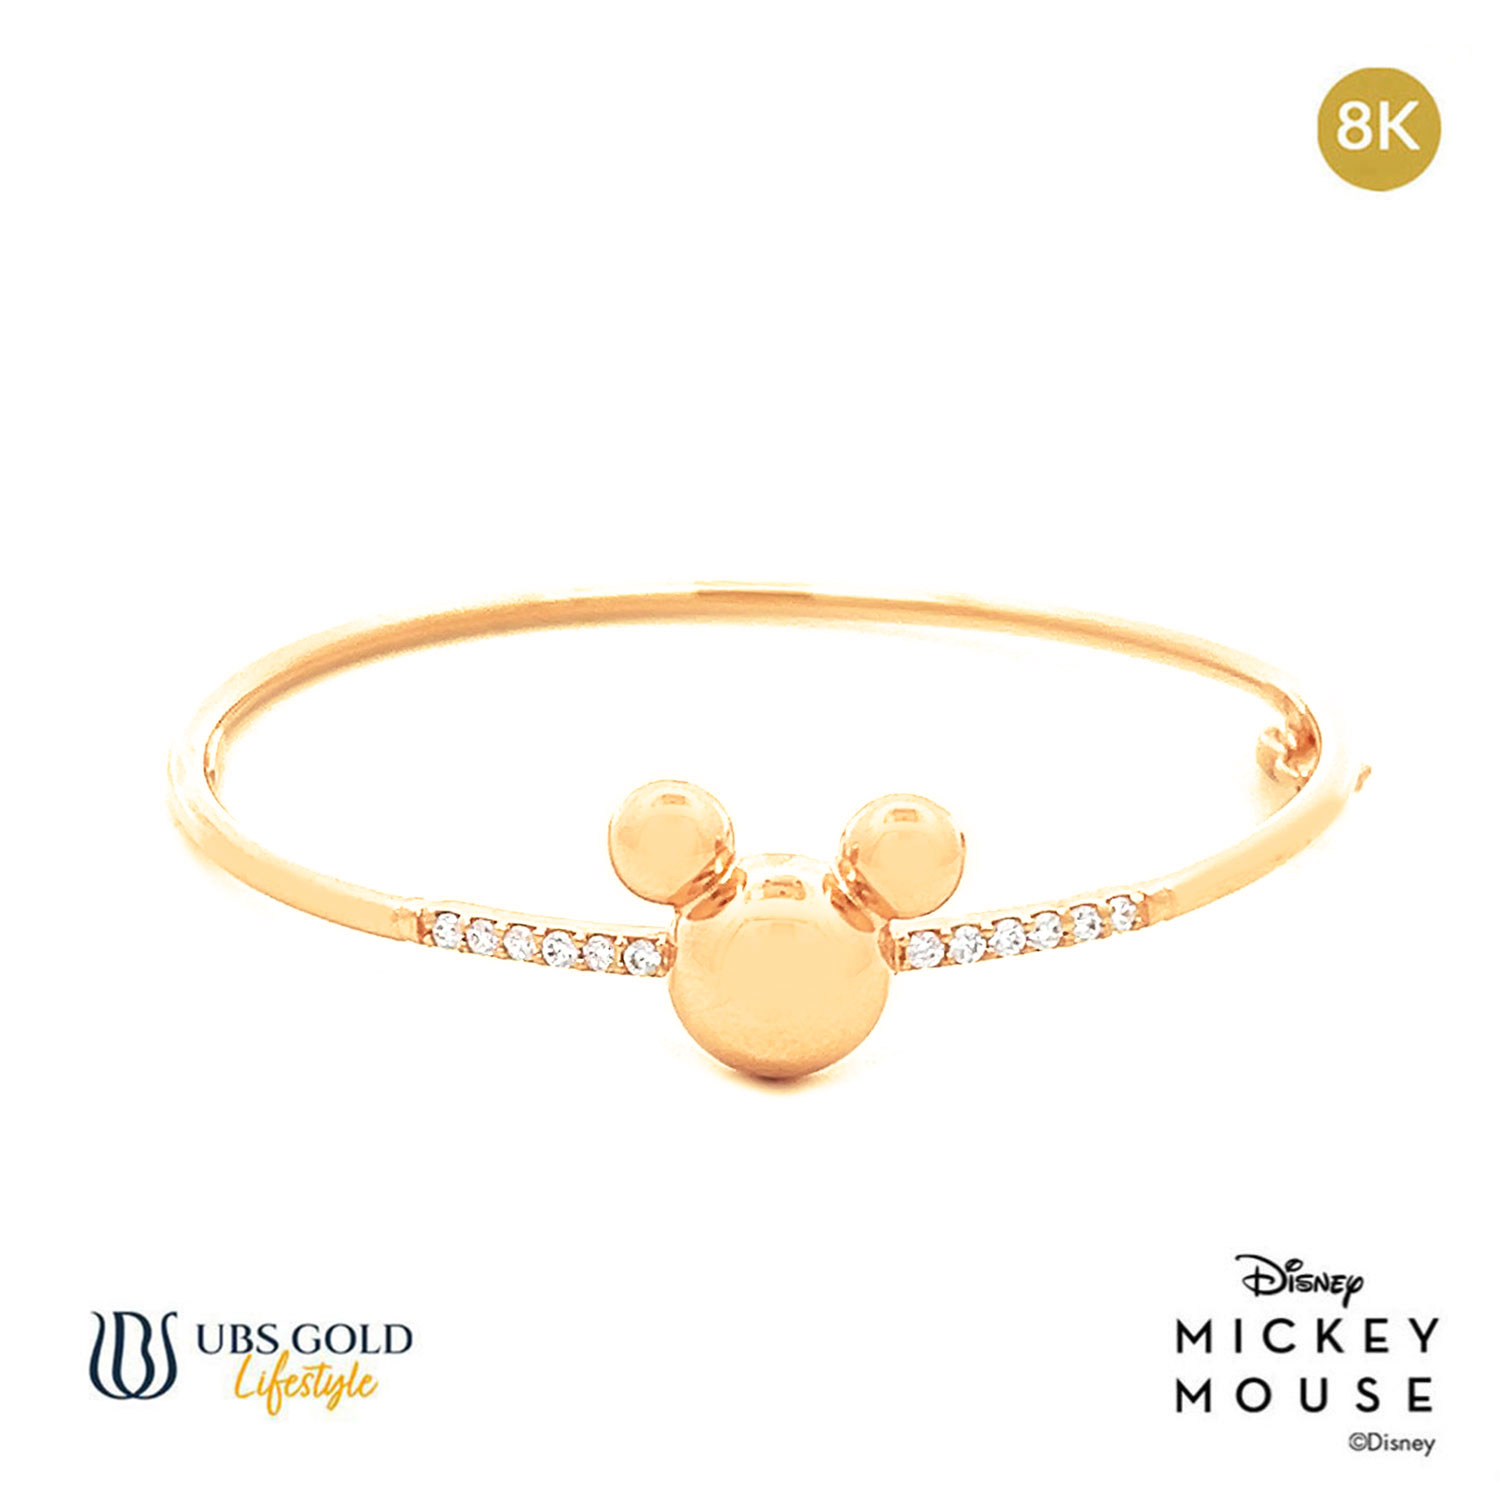 UBS Gold Gelang Emas Bayi Disney Mickey Mouse - Vgy0145K - 8K